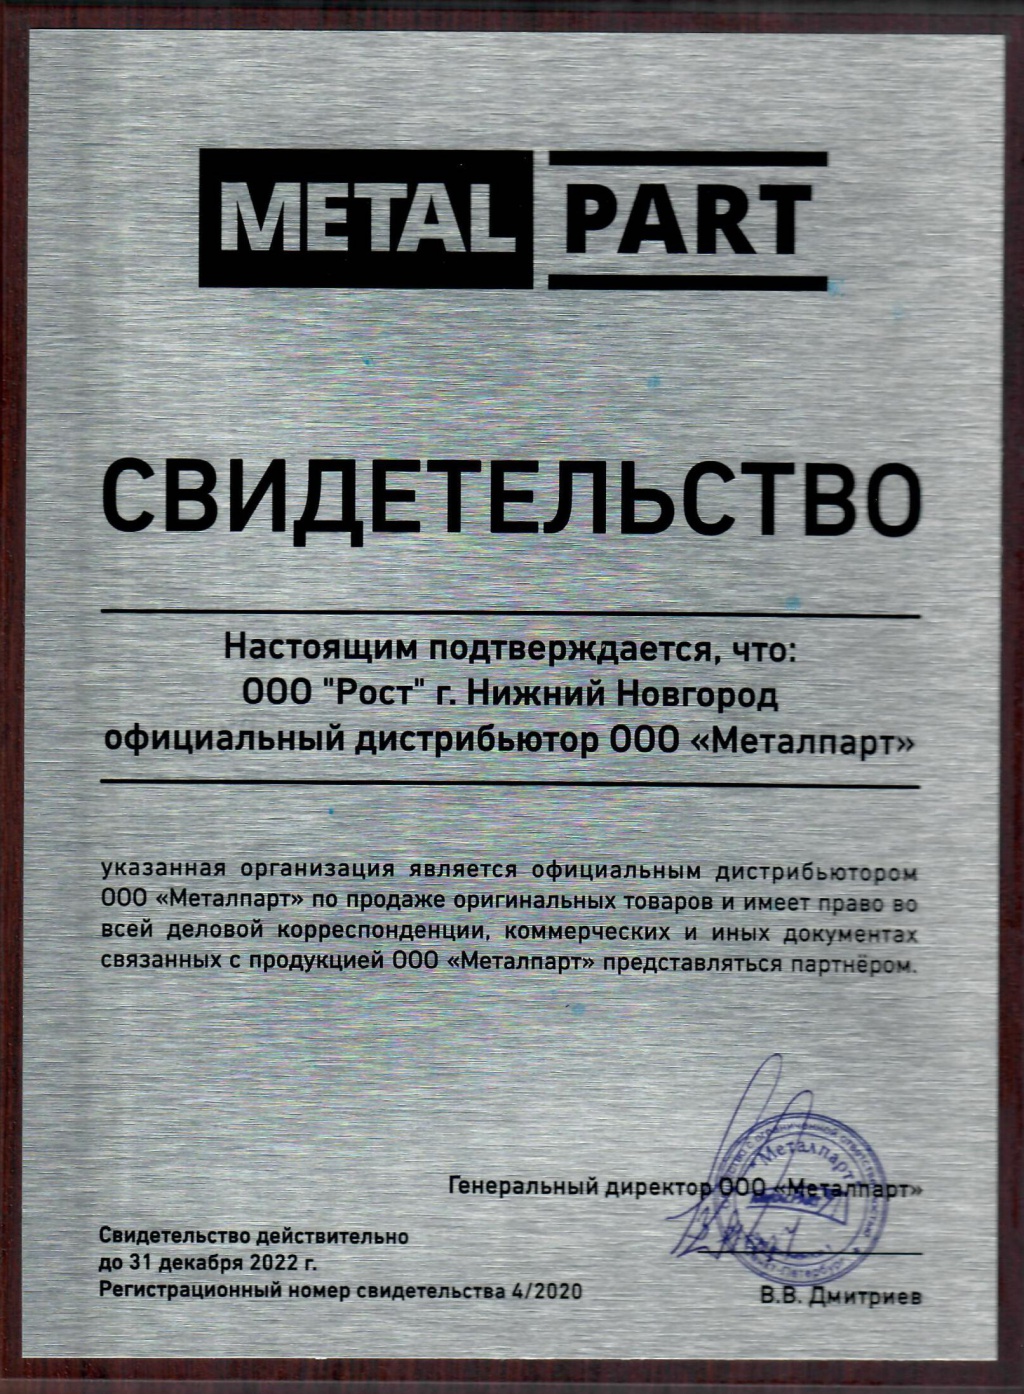 MetalPart